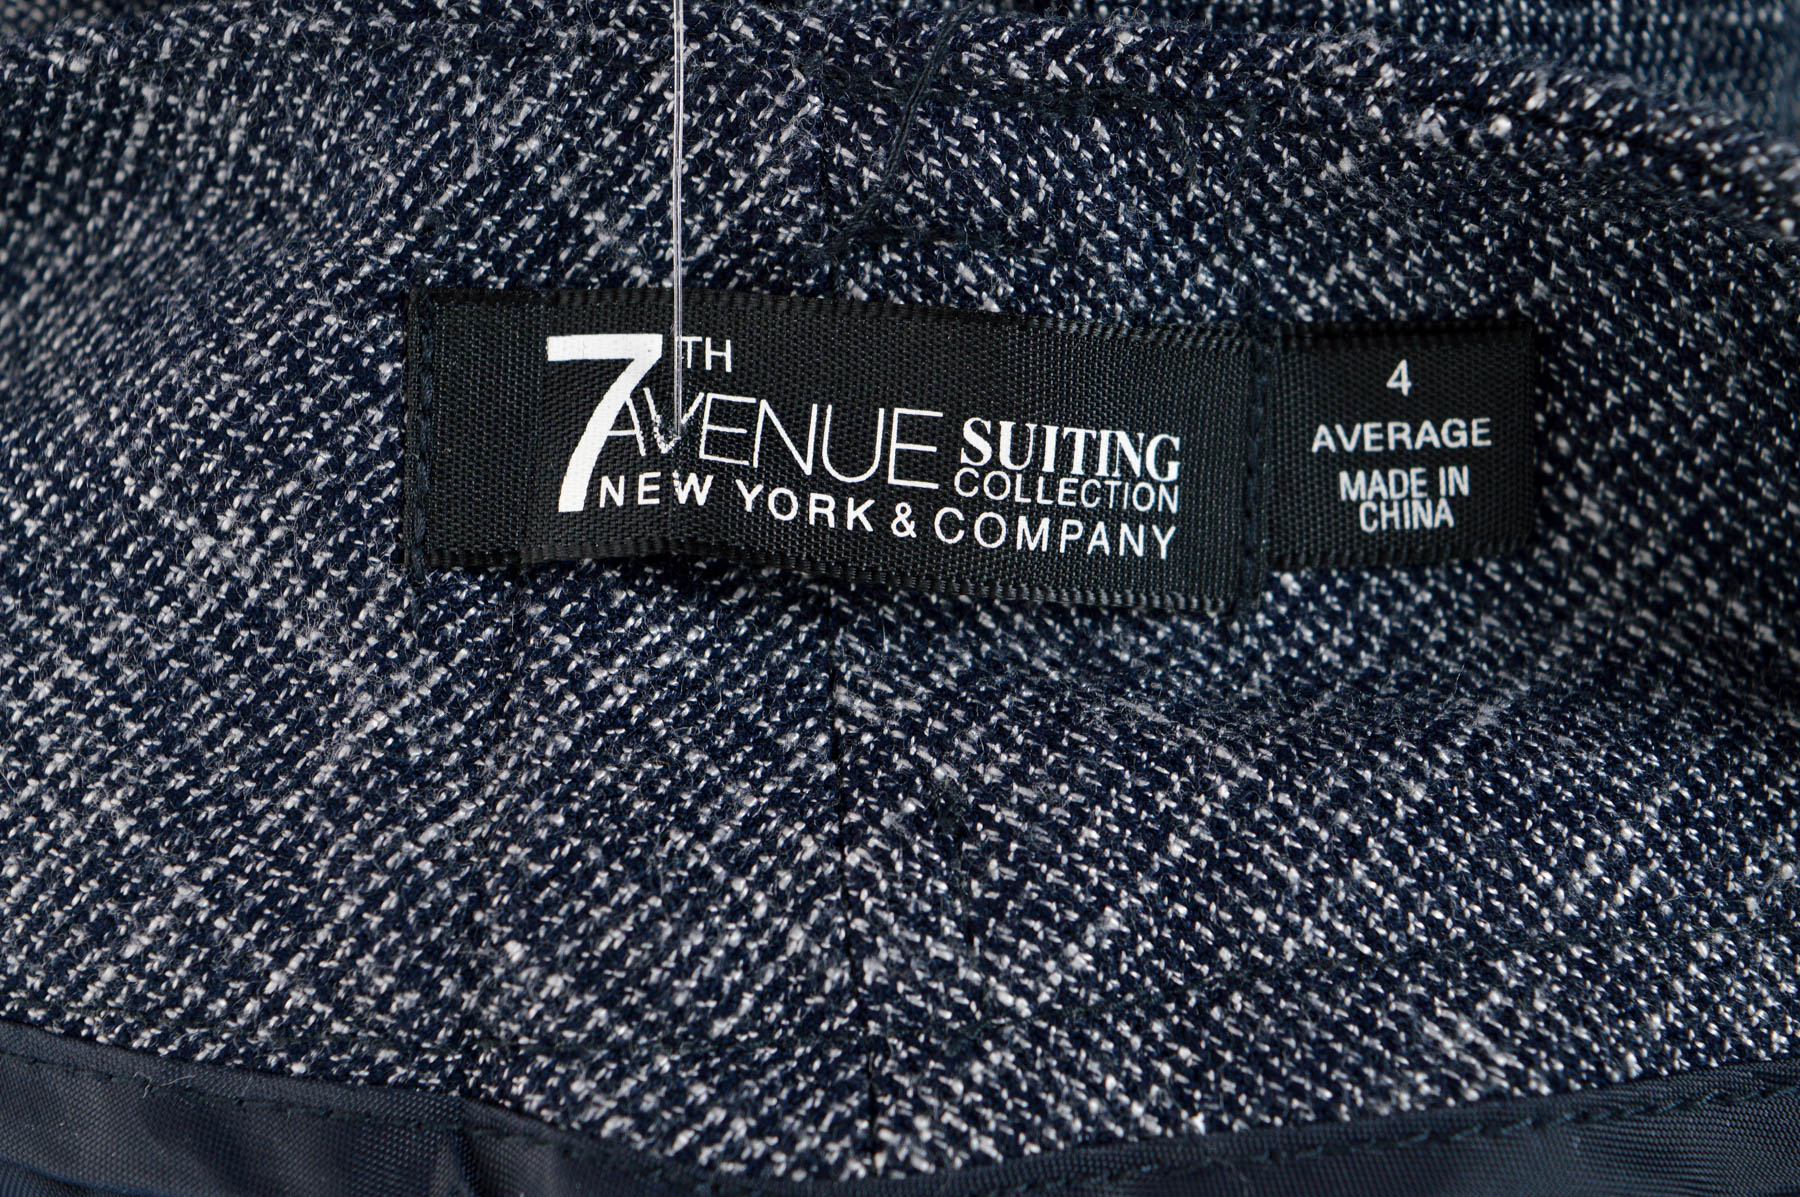 Women's trousers - New York & Company - 2